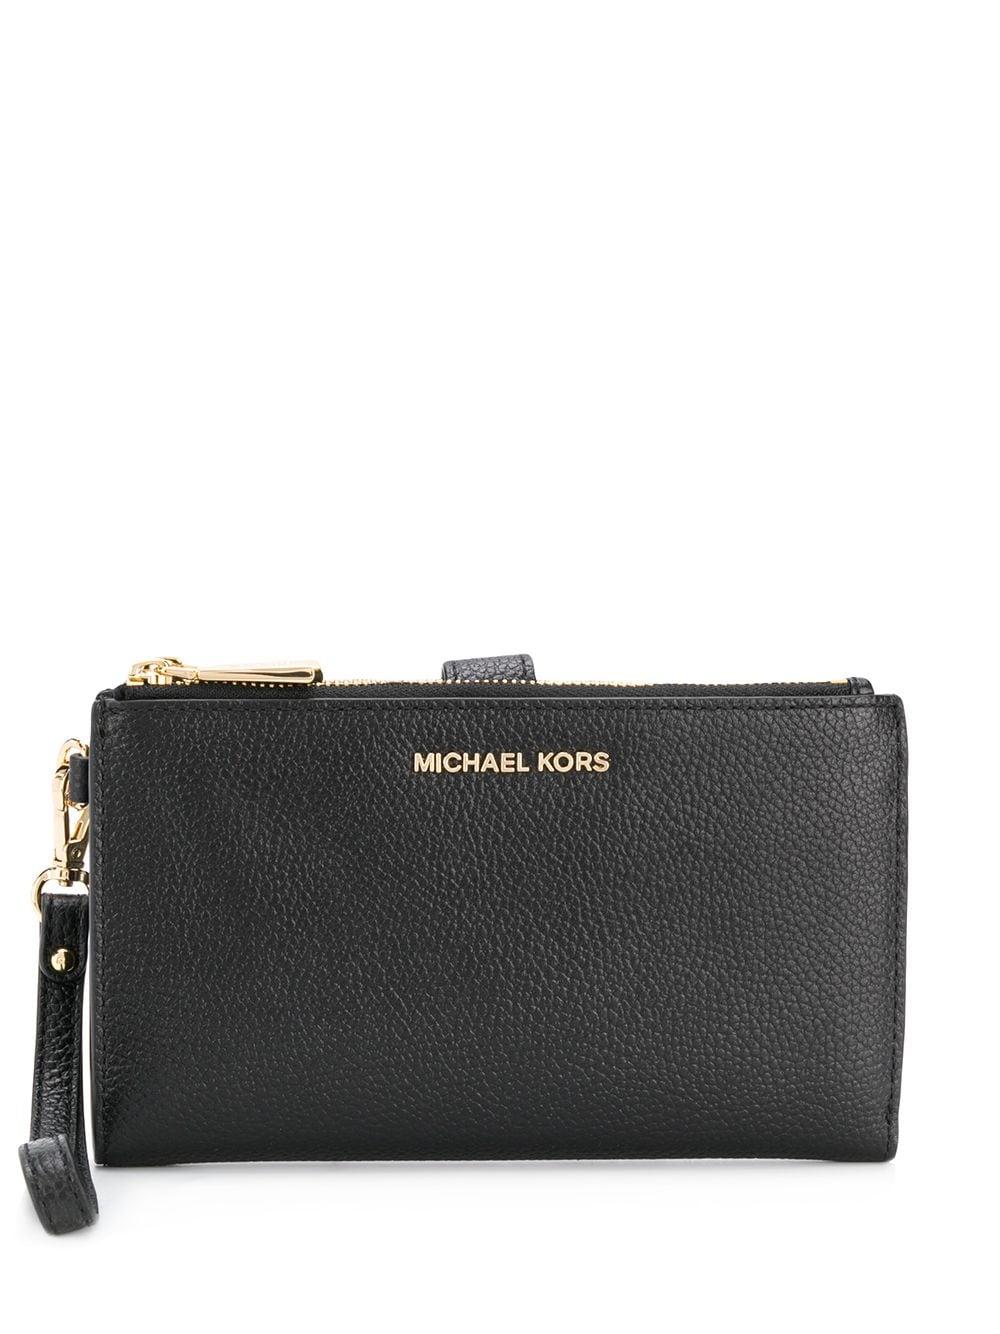 MICHAEL Michael Kors Jet Set Leather Clutch Bag in Black | Lyst